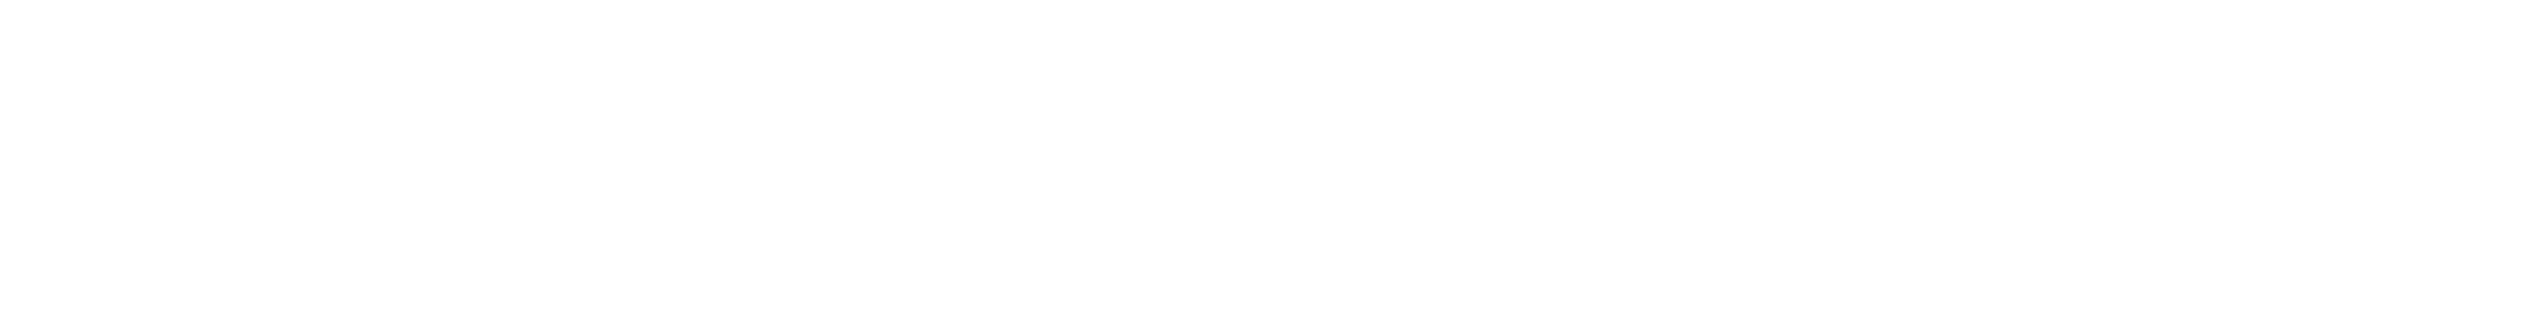 Bear Route